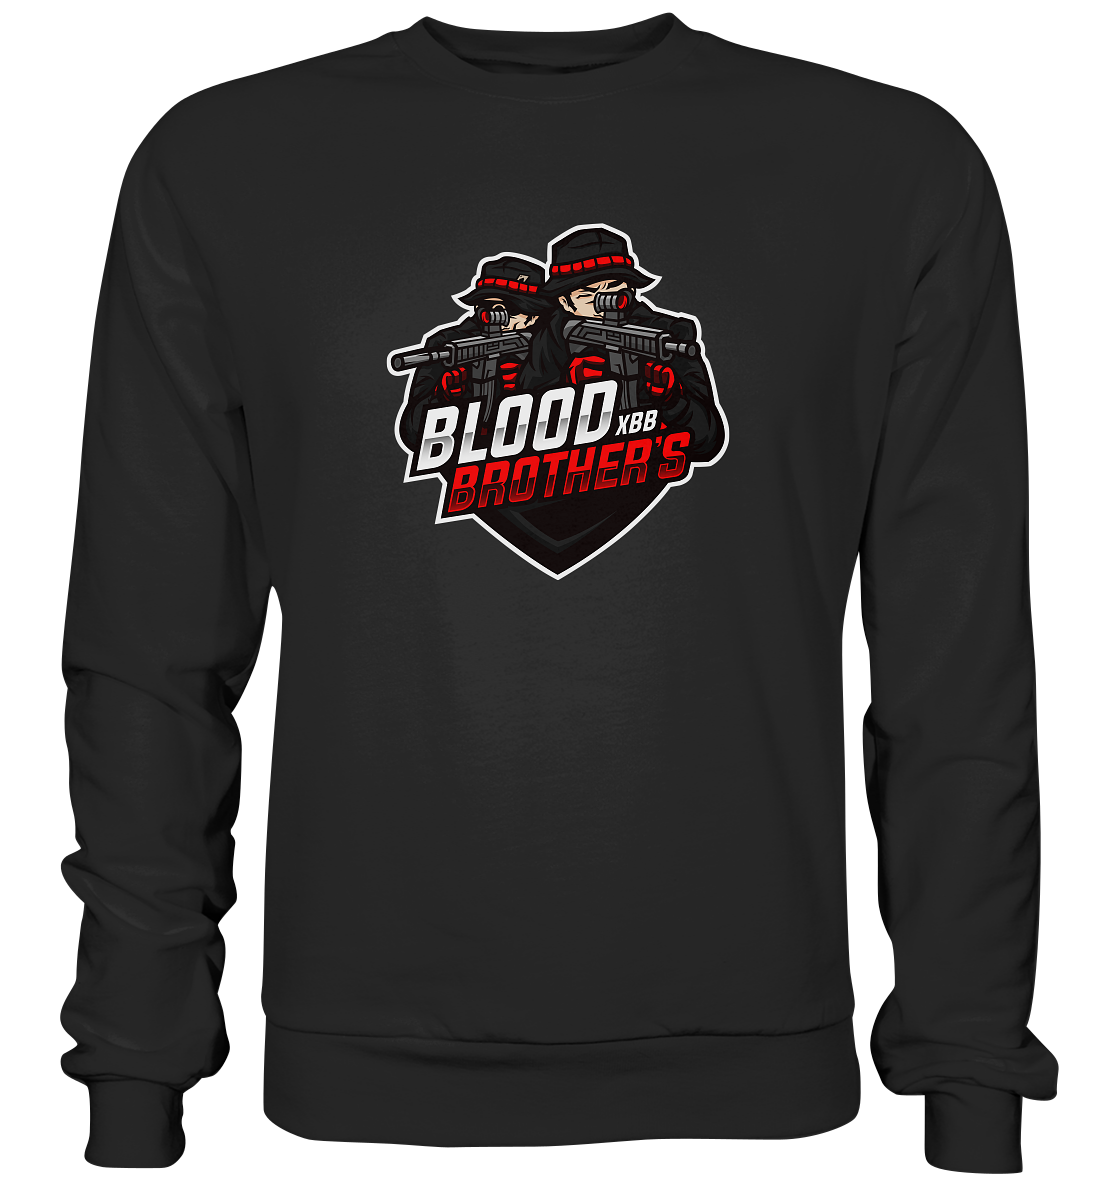 BLOODBROTHER'S - Basic Sweatshirt